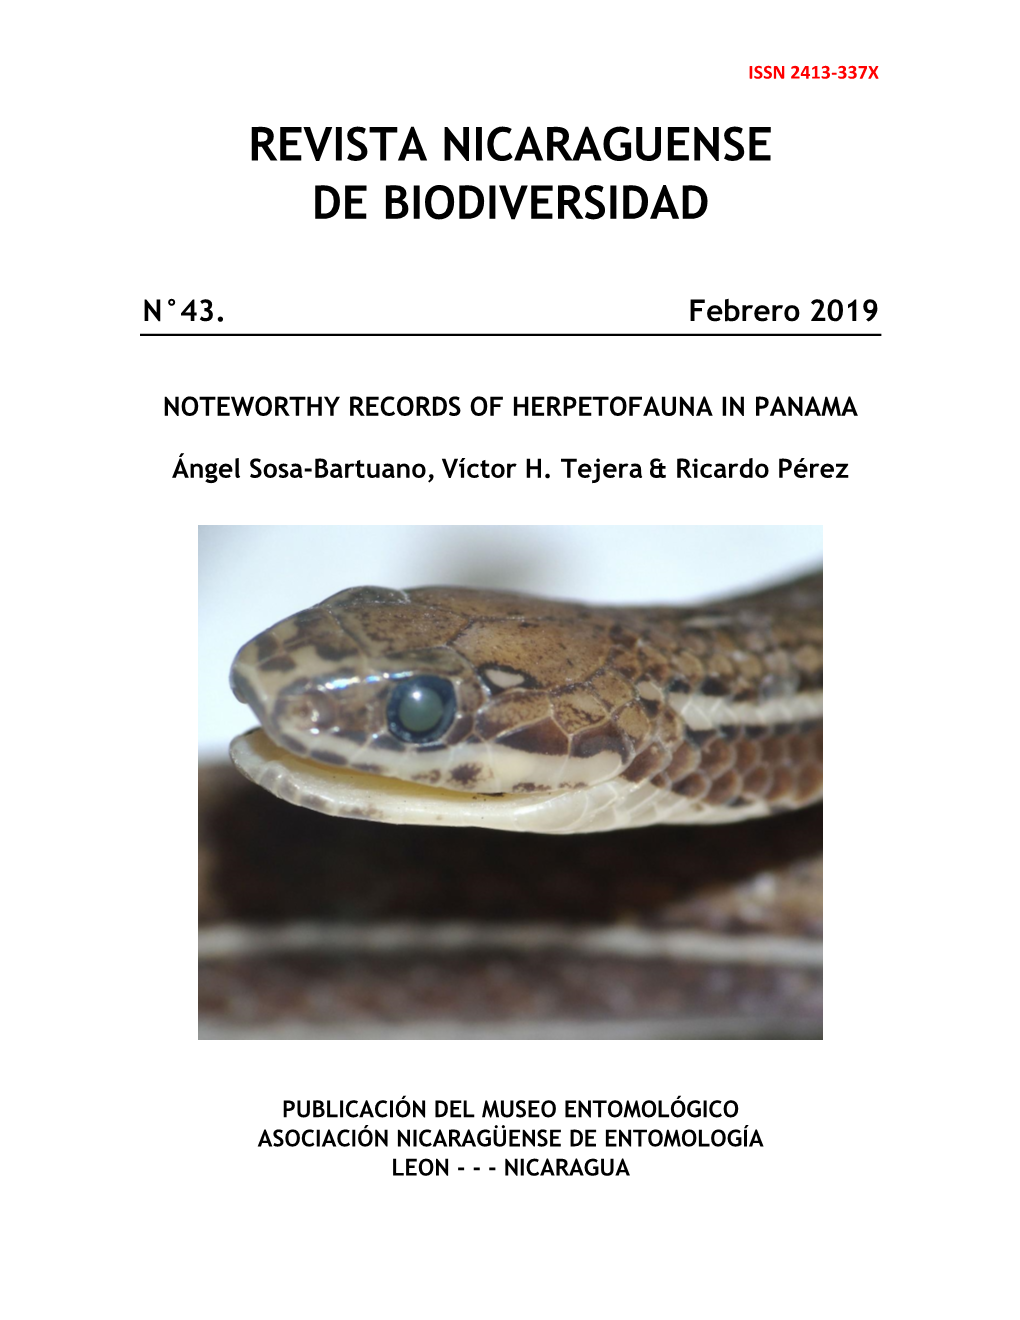 Noteworthy Records of Herpetofauna in Panama. 8